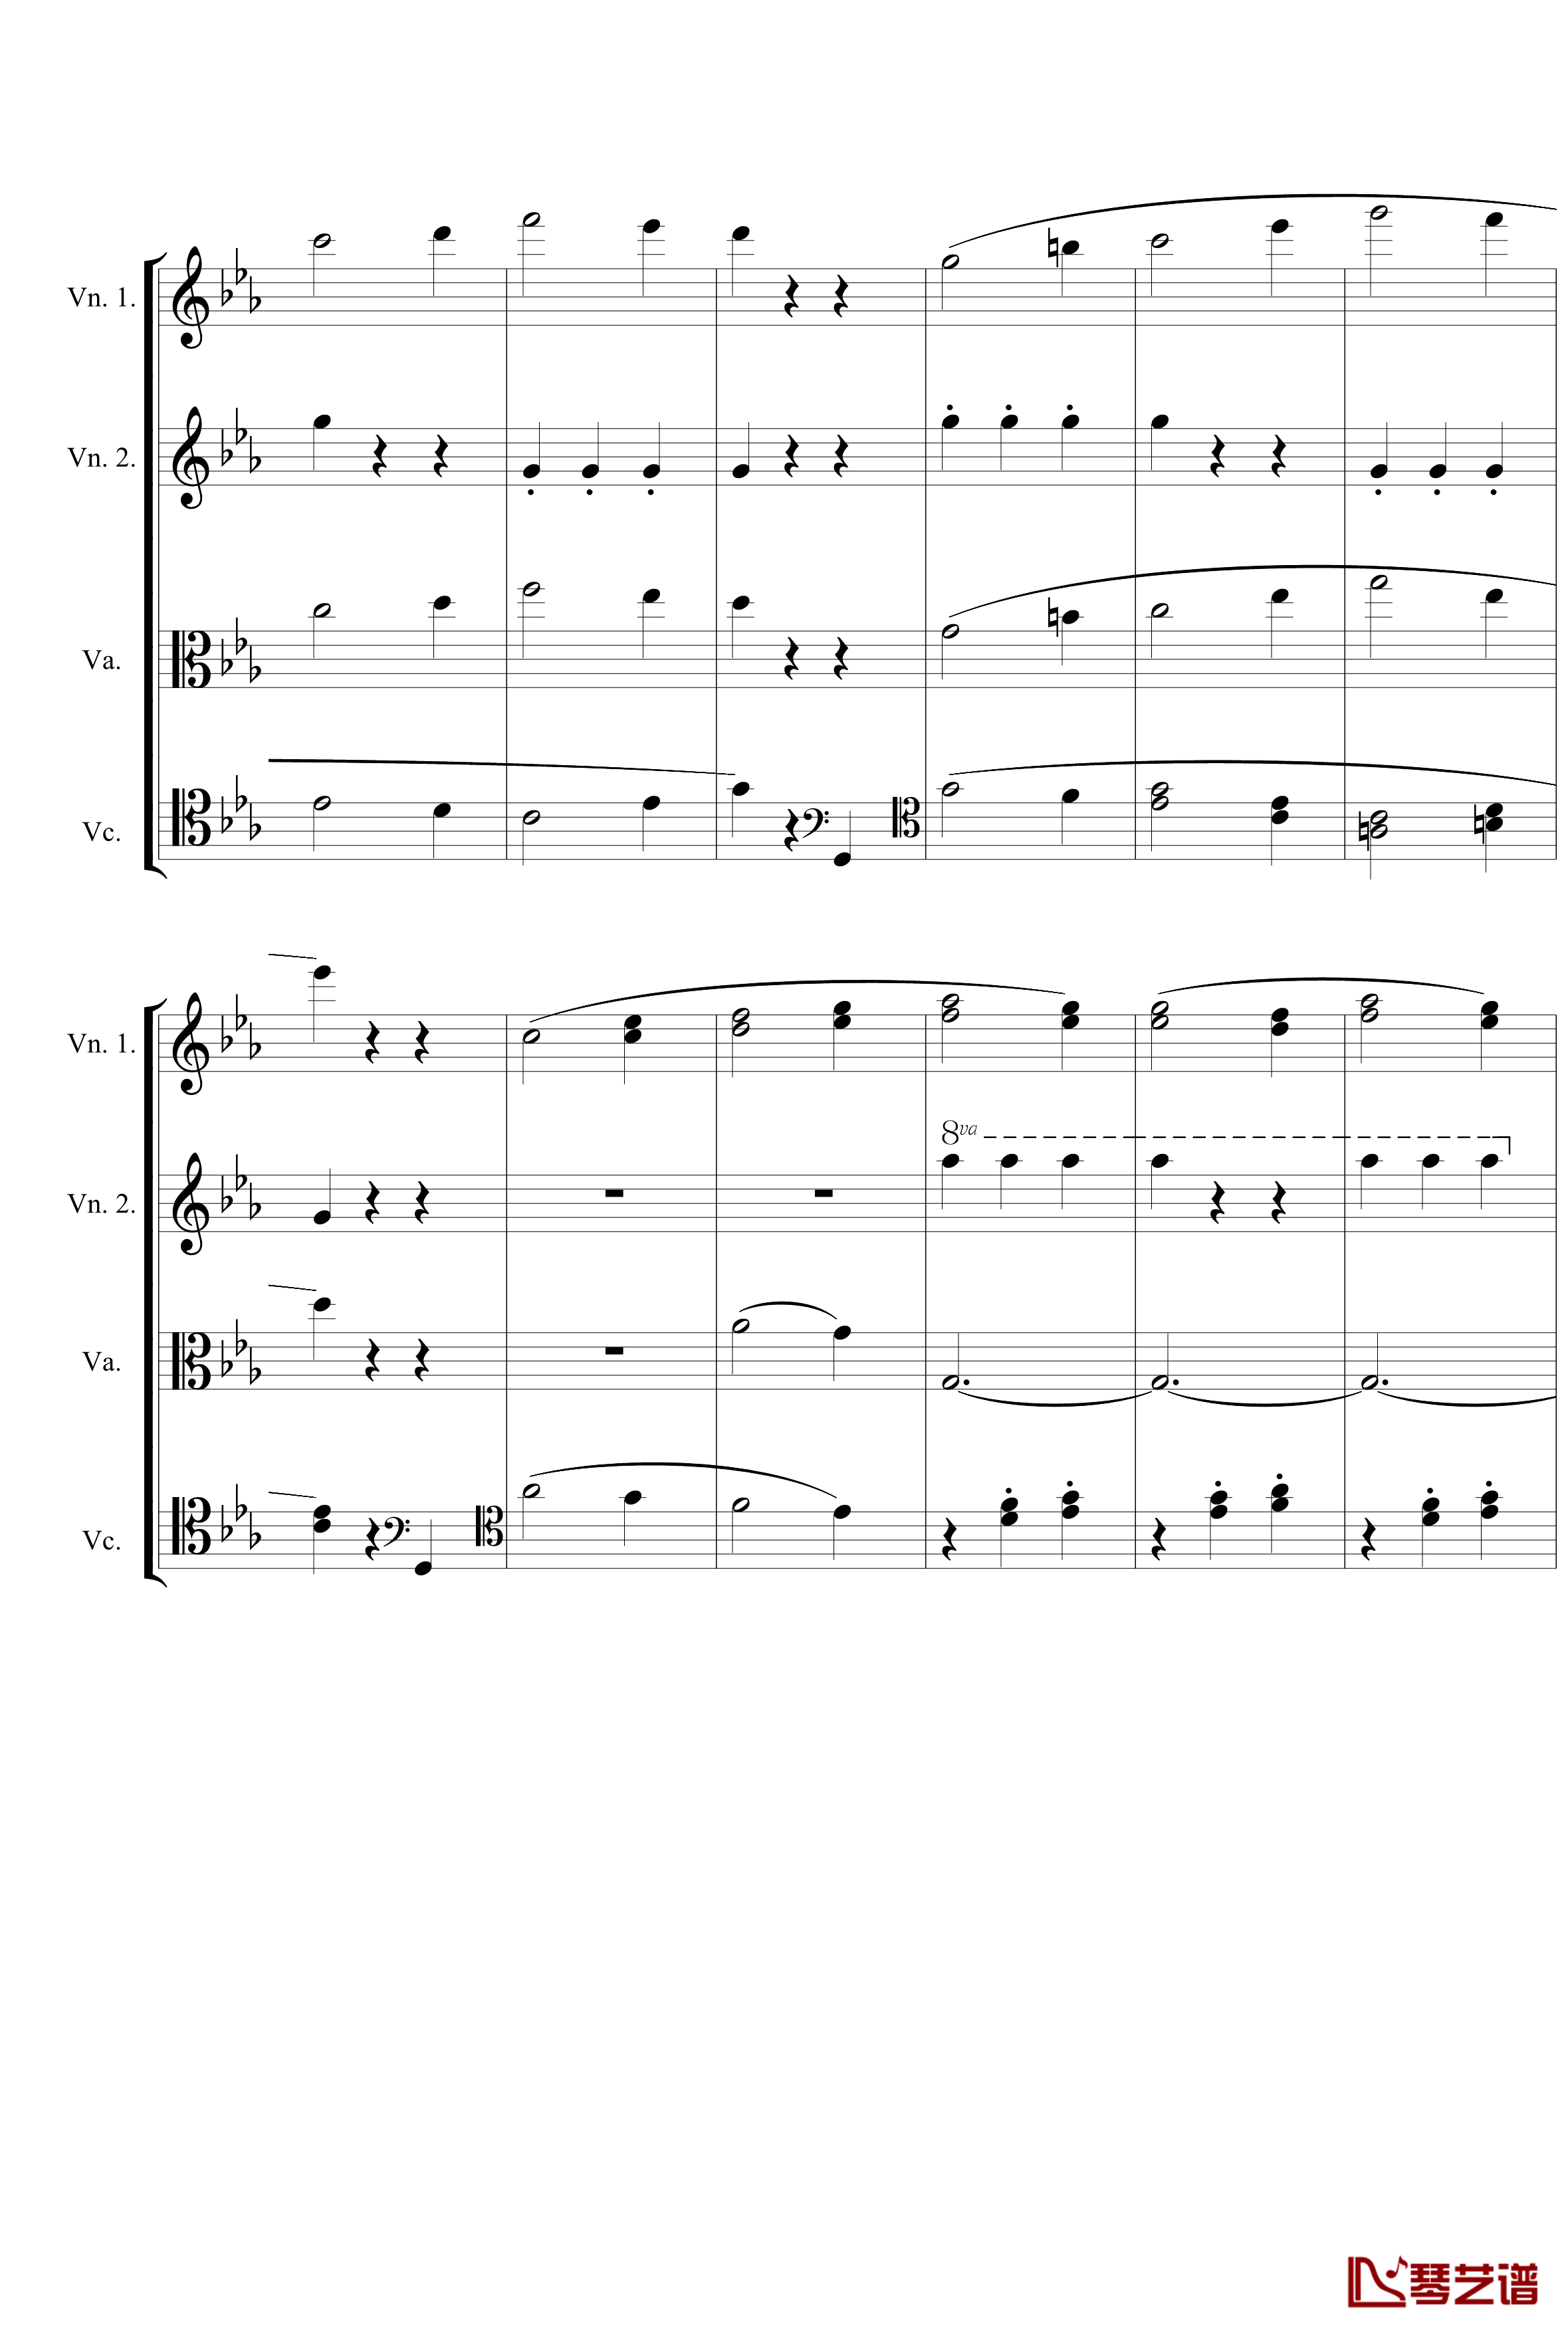 Symphony No.5 in C Minor 3rd钢琴谱-String quartet-贝多芬-beethoven8